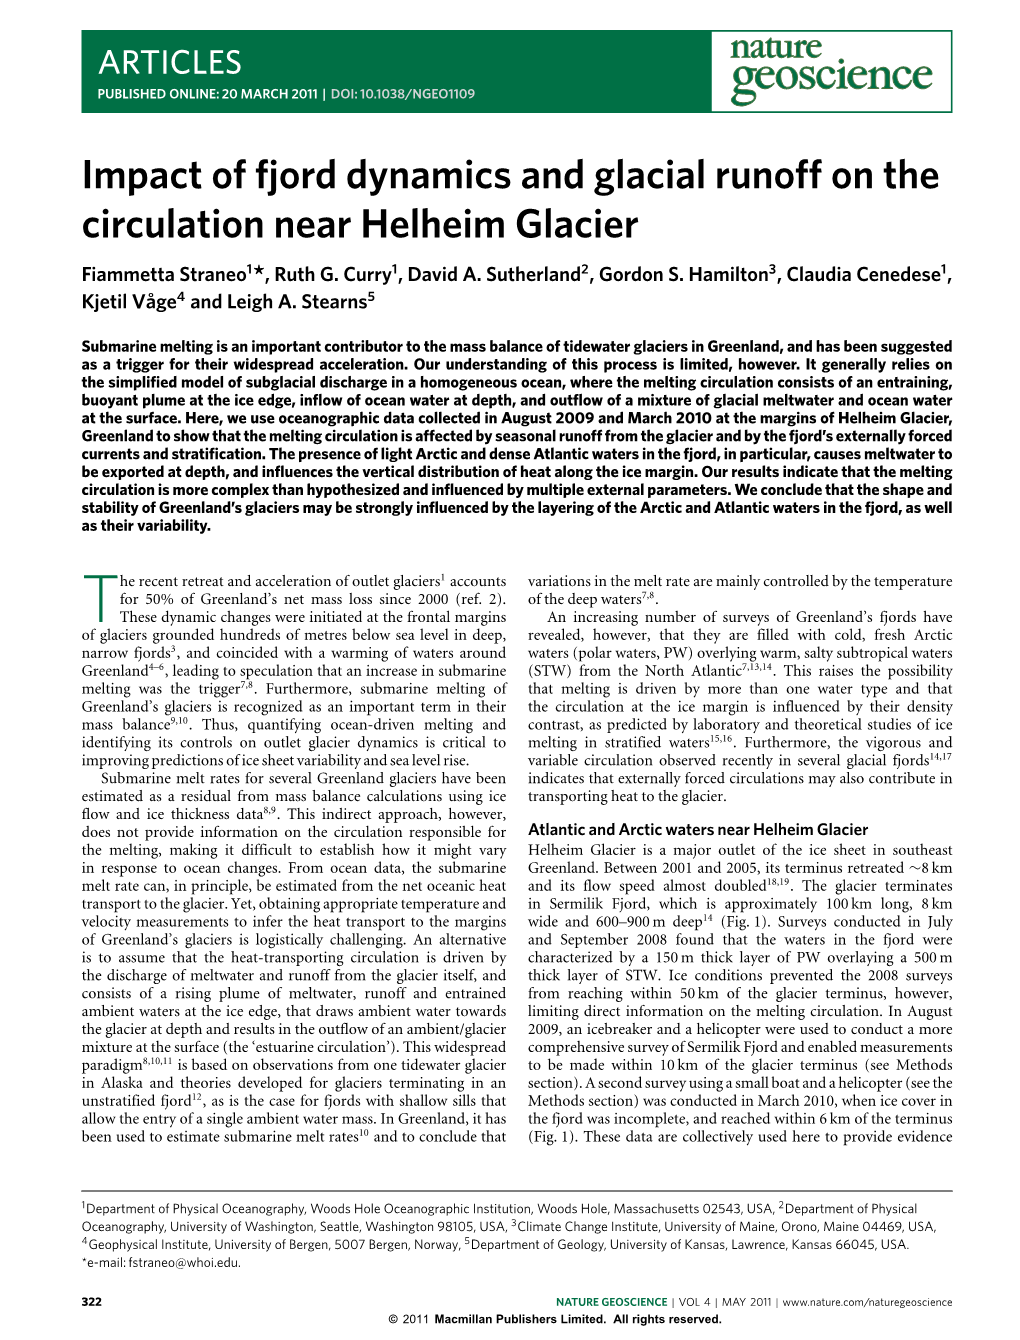 Impact of Fjord Dynamics and Glacial Runoff on the Circulation Near Helheim Glacier Fiammetta Straneo1*, Ruth G